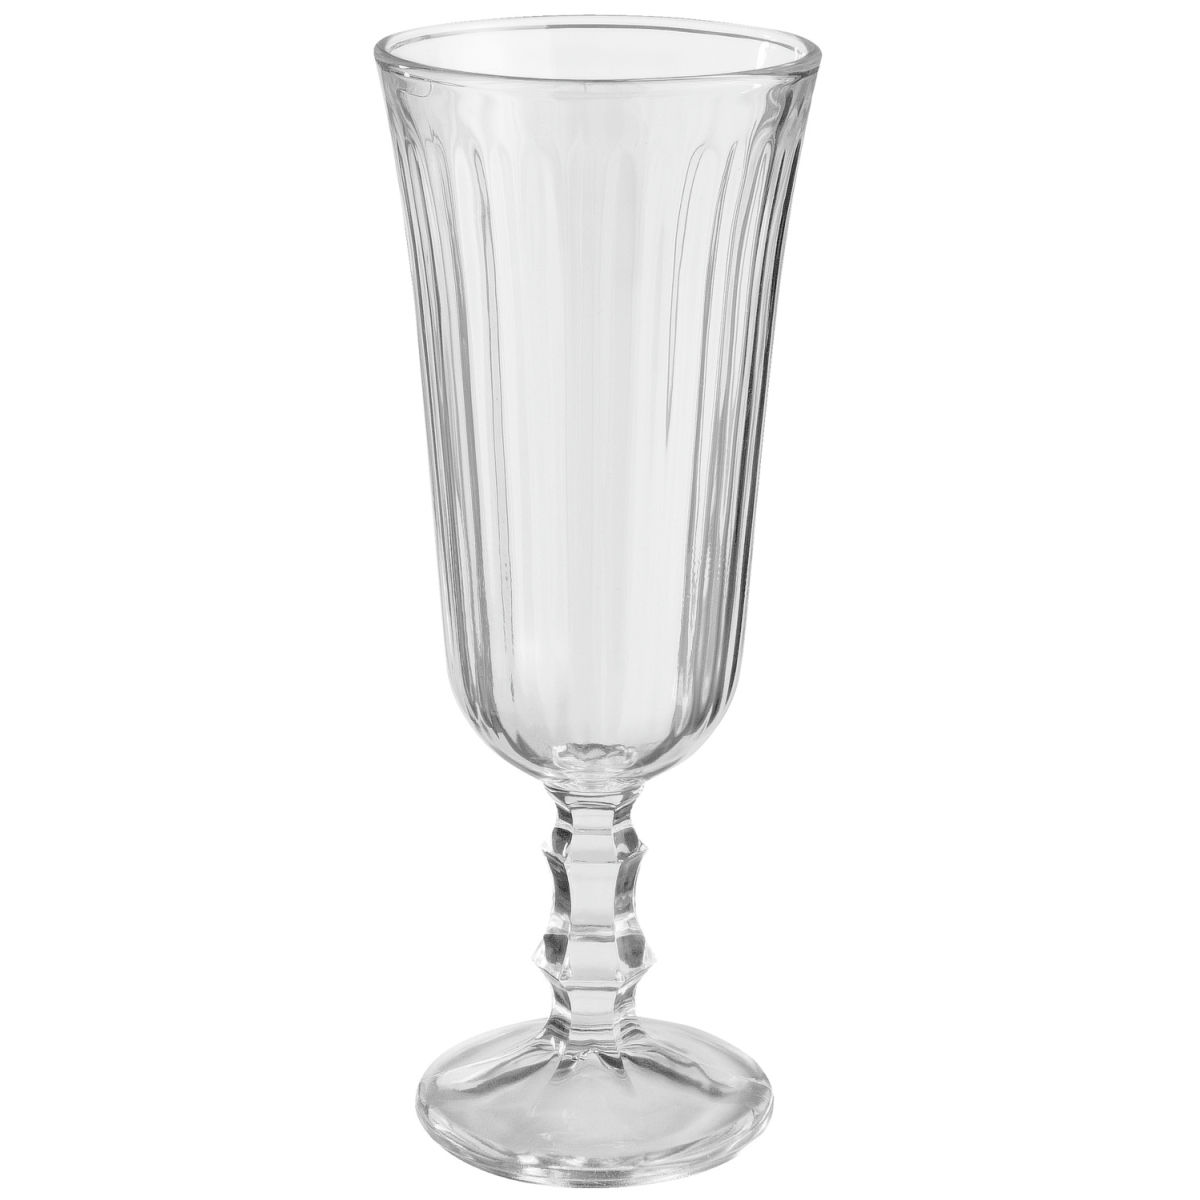 Royal leerdam Champagneglas Nostalgie; 120ml, 5.9x15.4 cm (ØxH); transparant; 6 stuk / verpakking